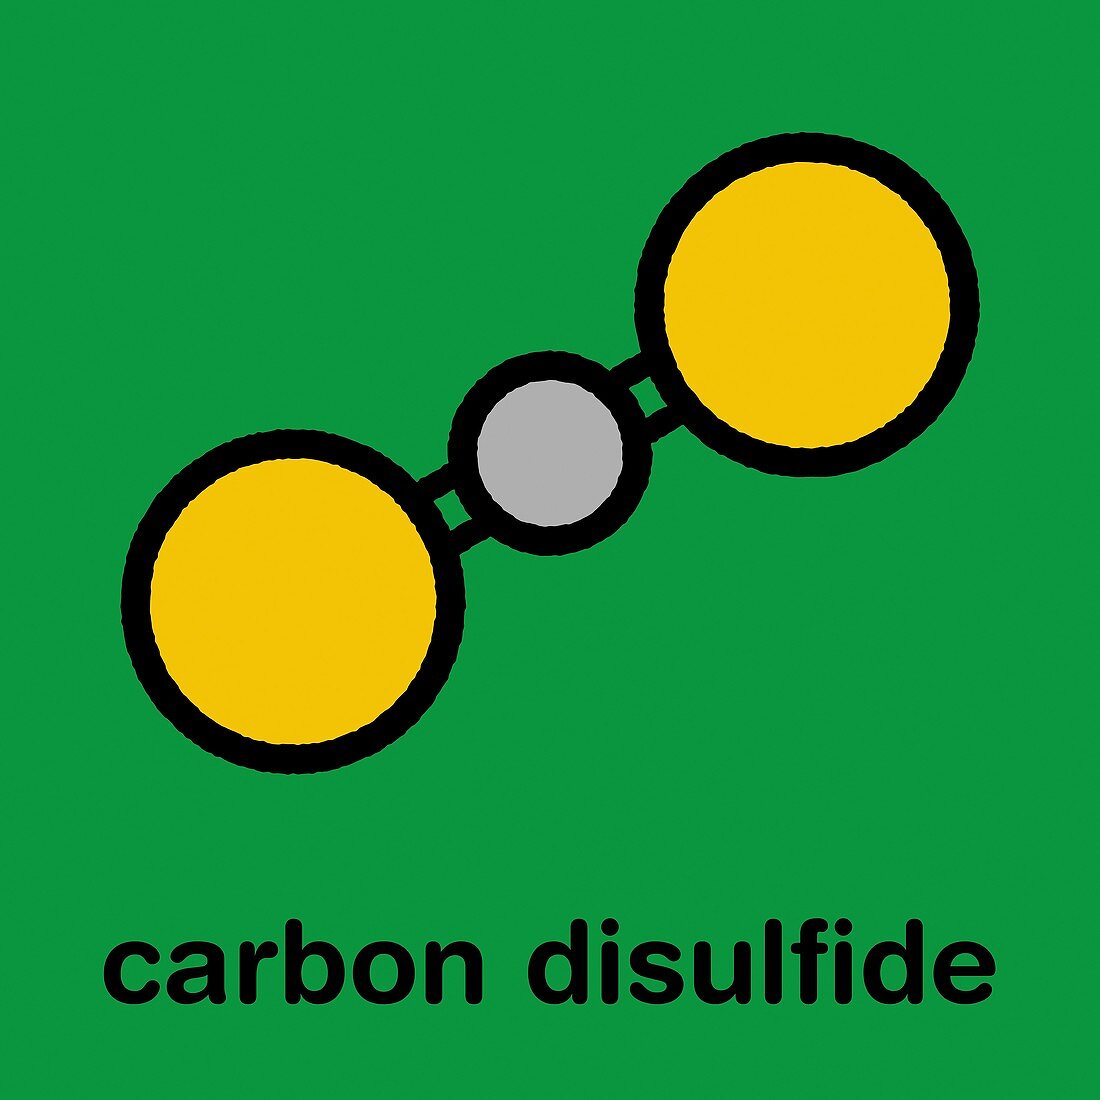 Carbon disulfide molecule, illustration